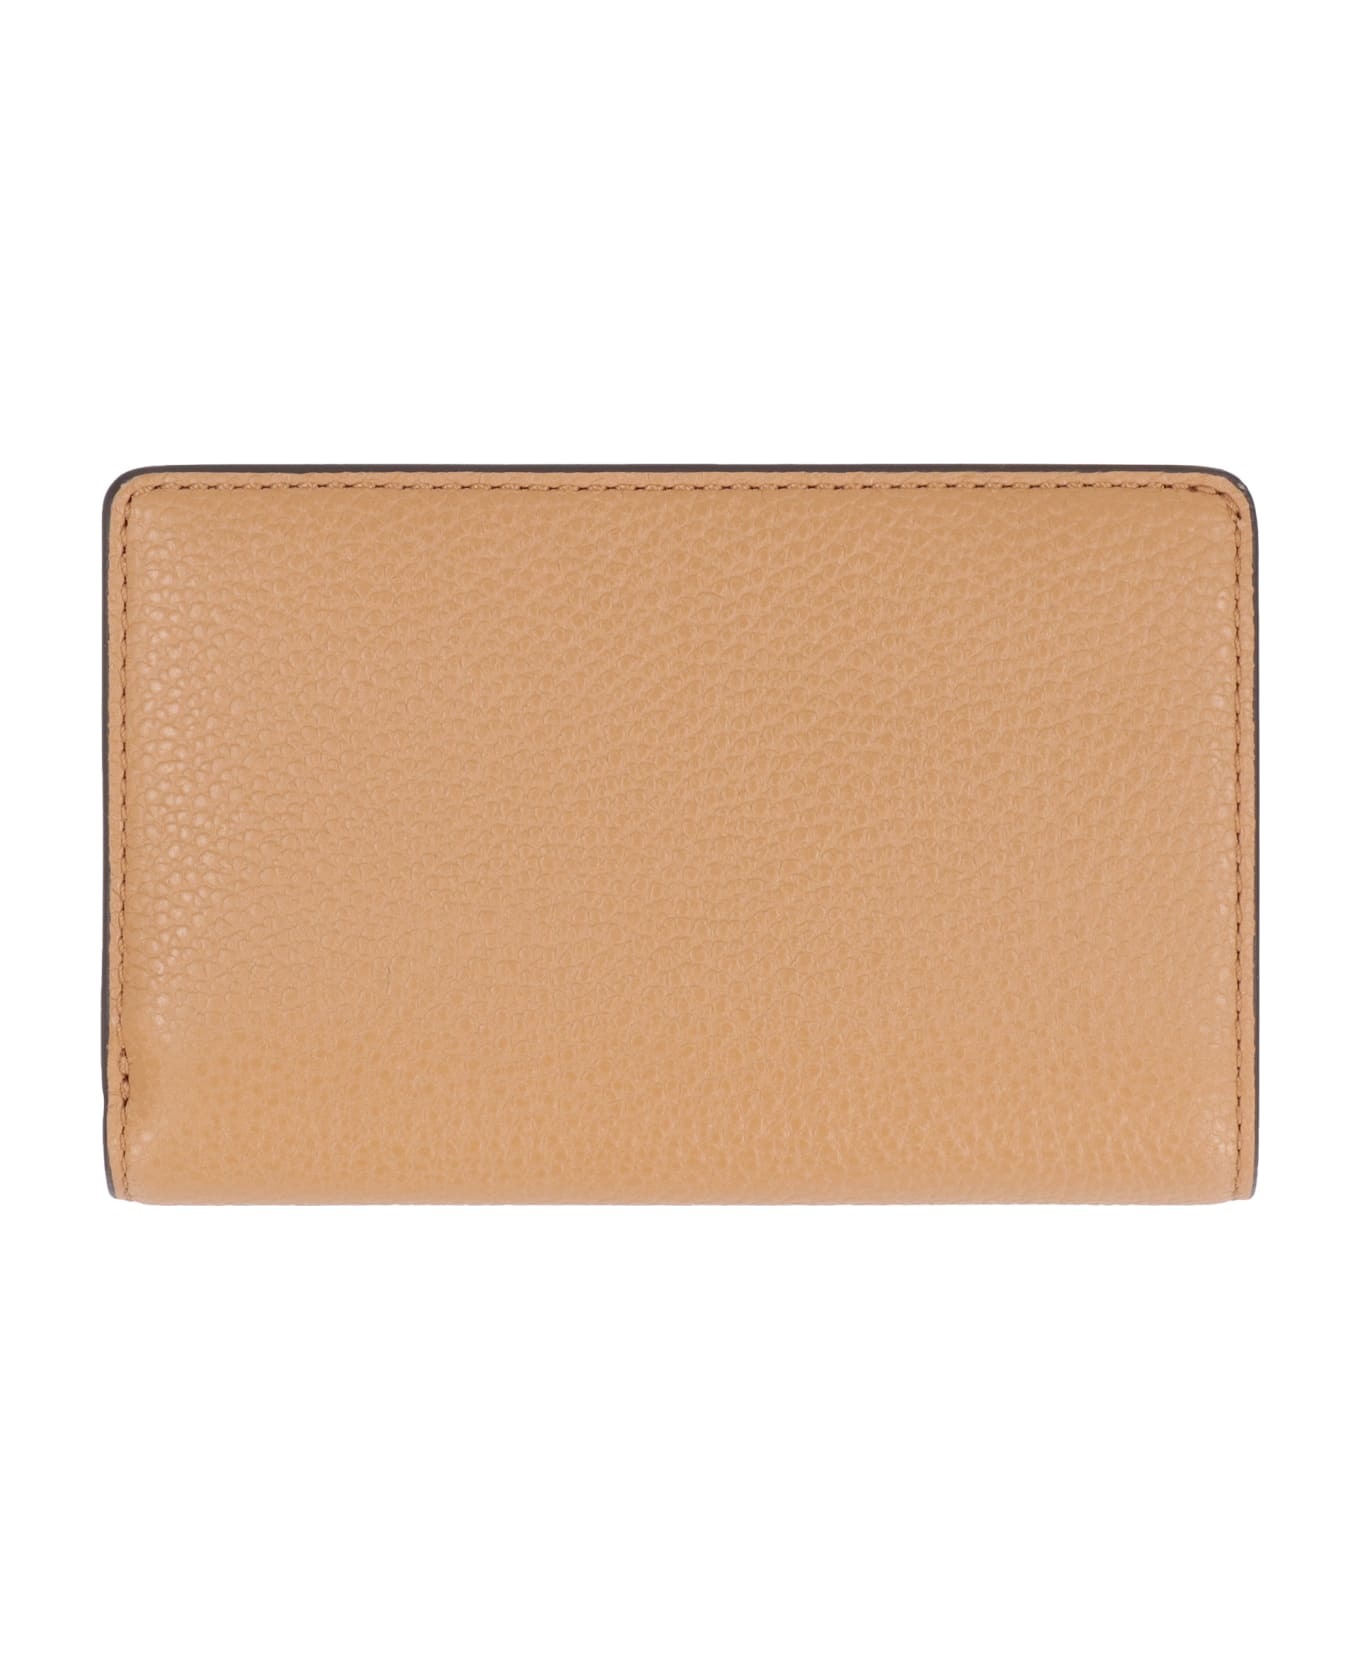 MICHAEL Michael Kors Grainy Leather Wallet - Saddle Brown 財布